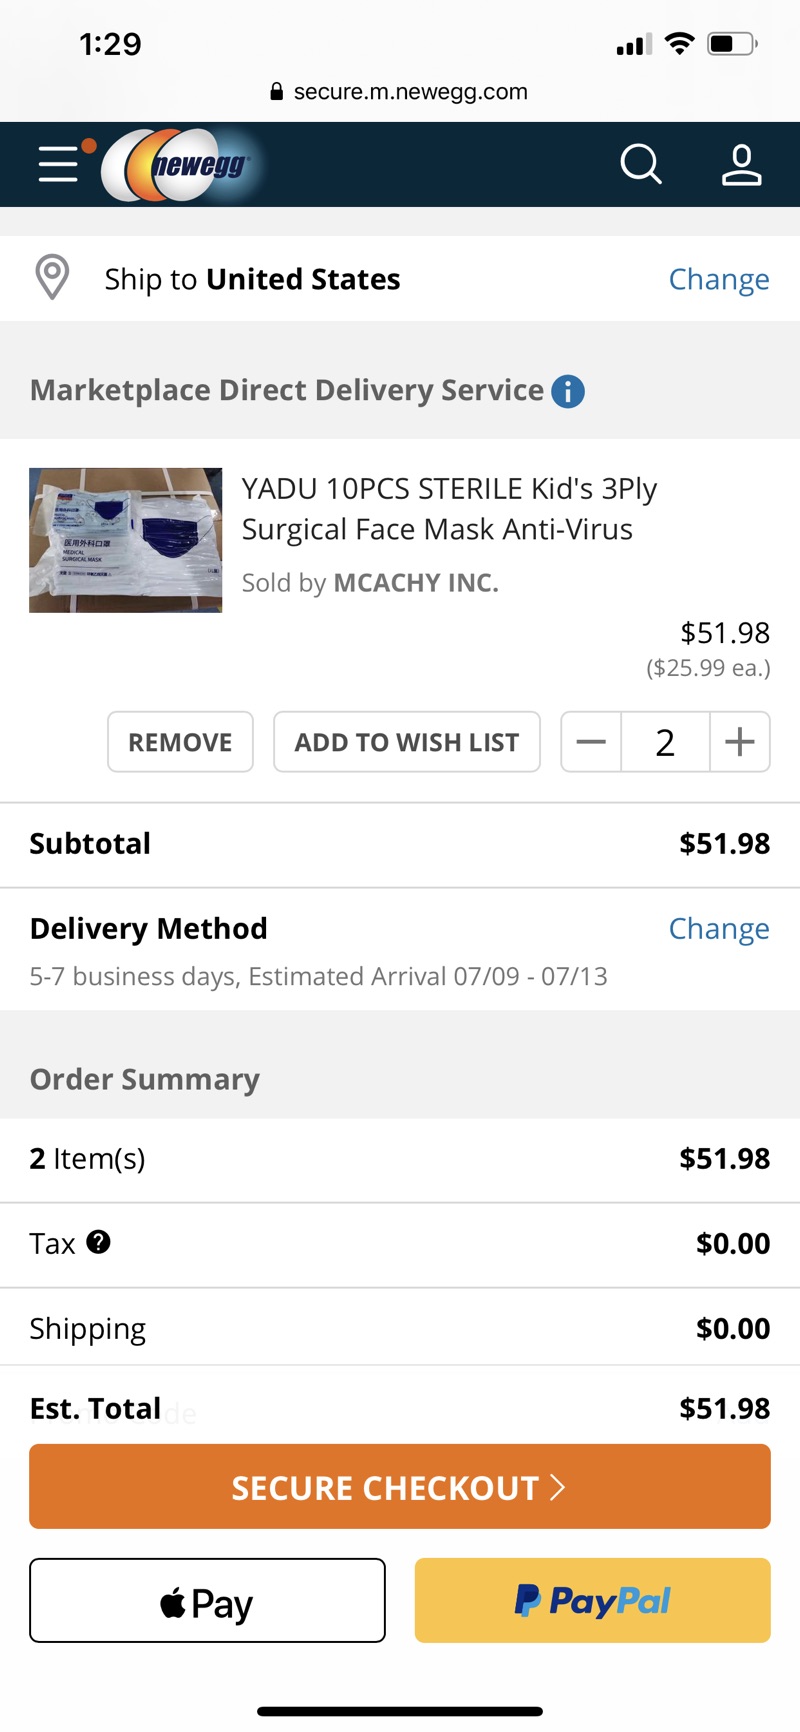 YADU 10PCS STERILE Kid's 3Ply Surgical Face Mask Anti-Virus - Newegg.com
袋鼠医生儿童医用外科口罩10片装